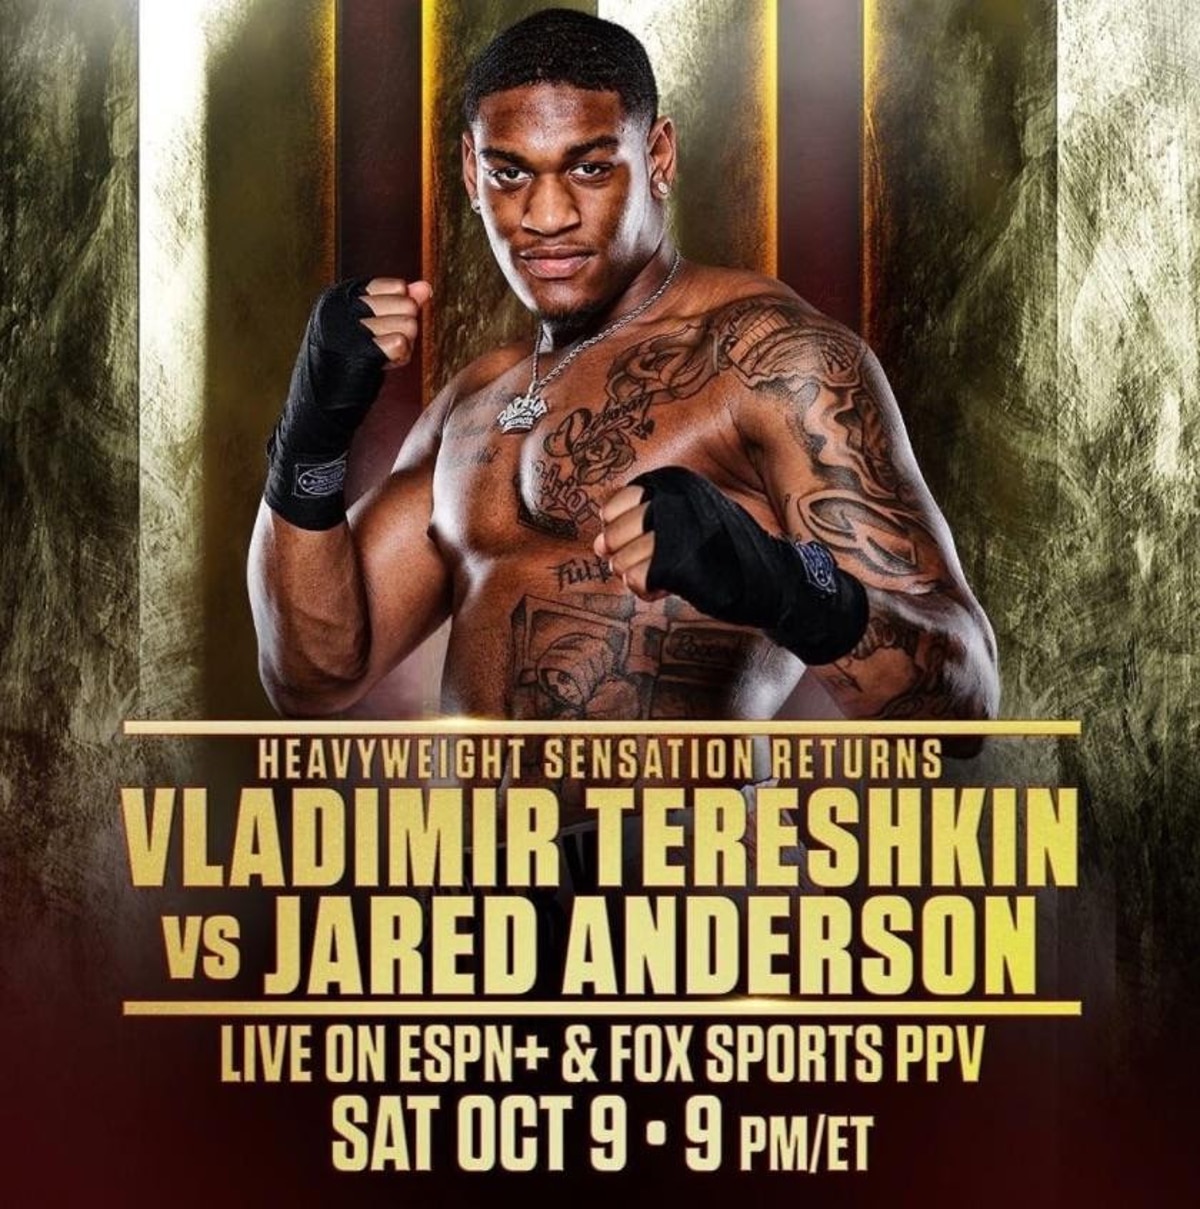 Fury vs. Wilder 3 undercard: Jared Anderson vs. Vladimir Tereshkin on October 9th